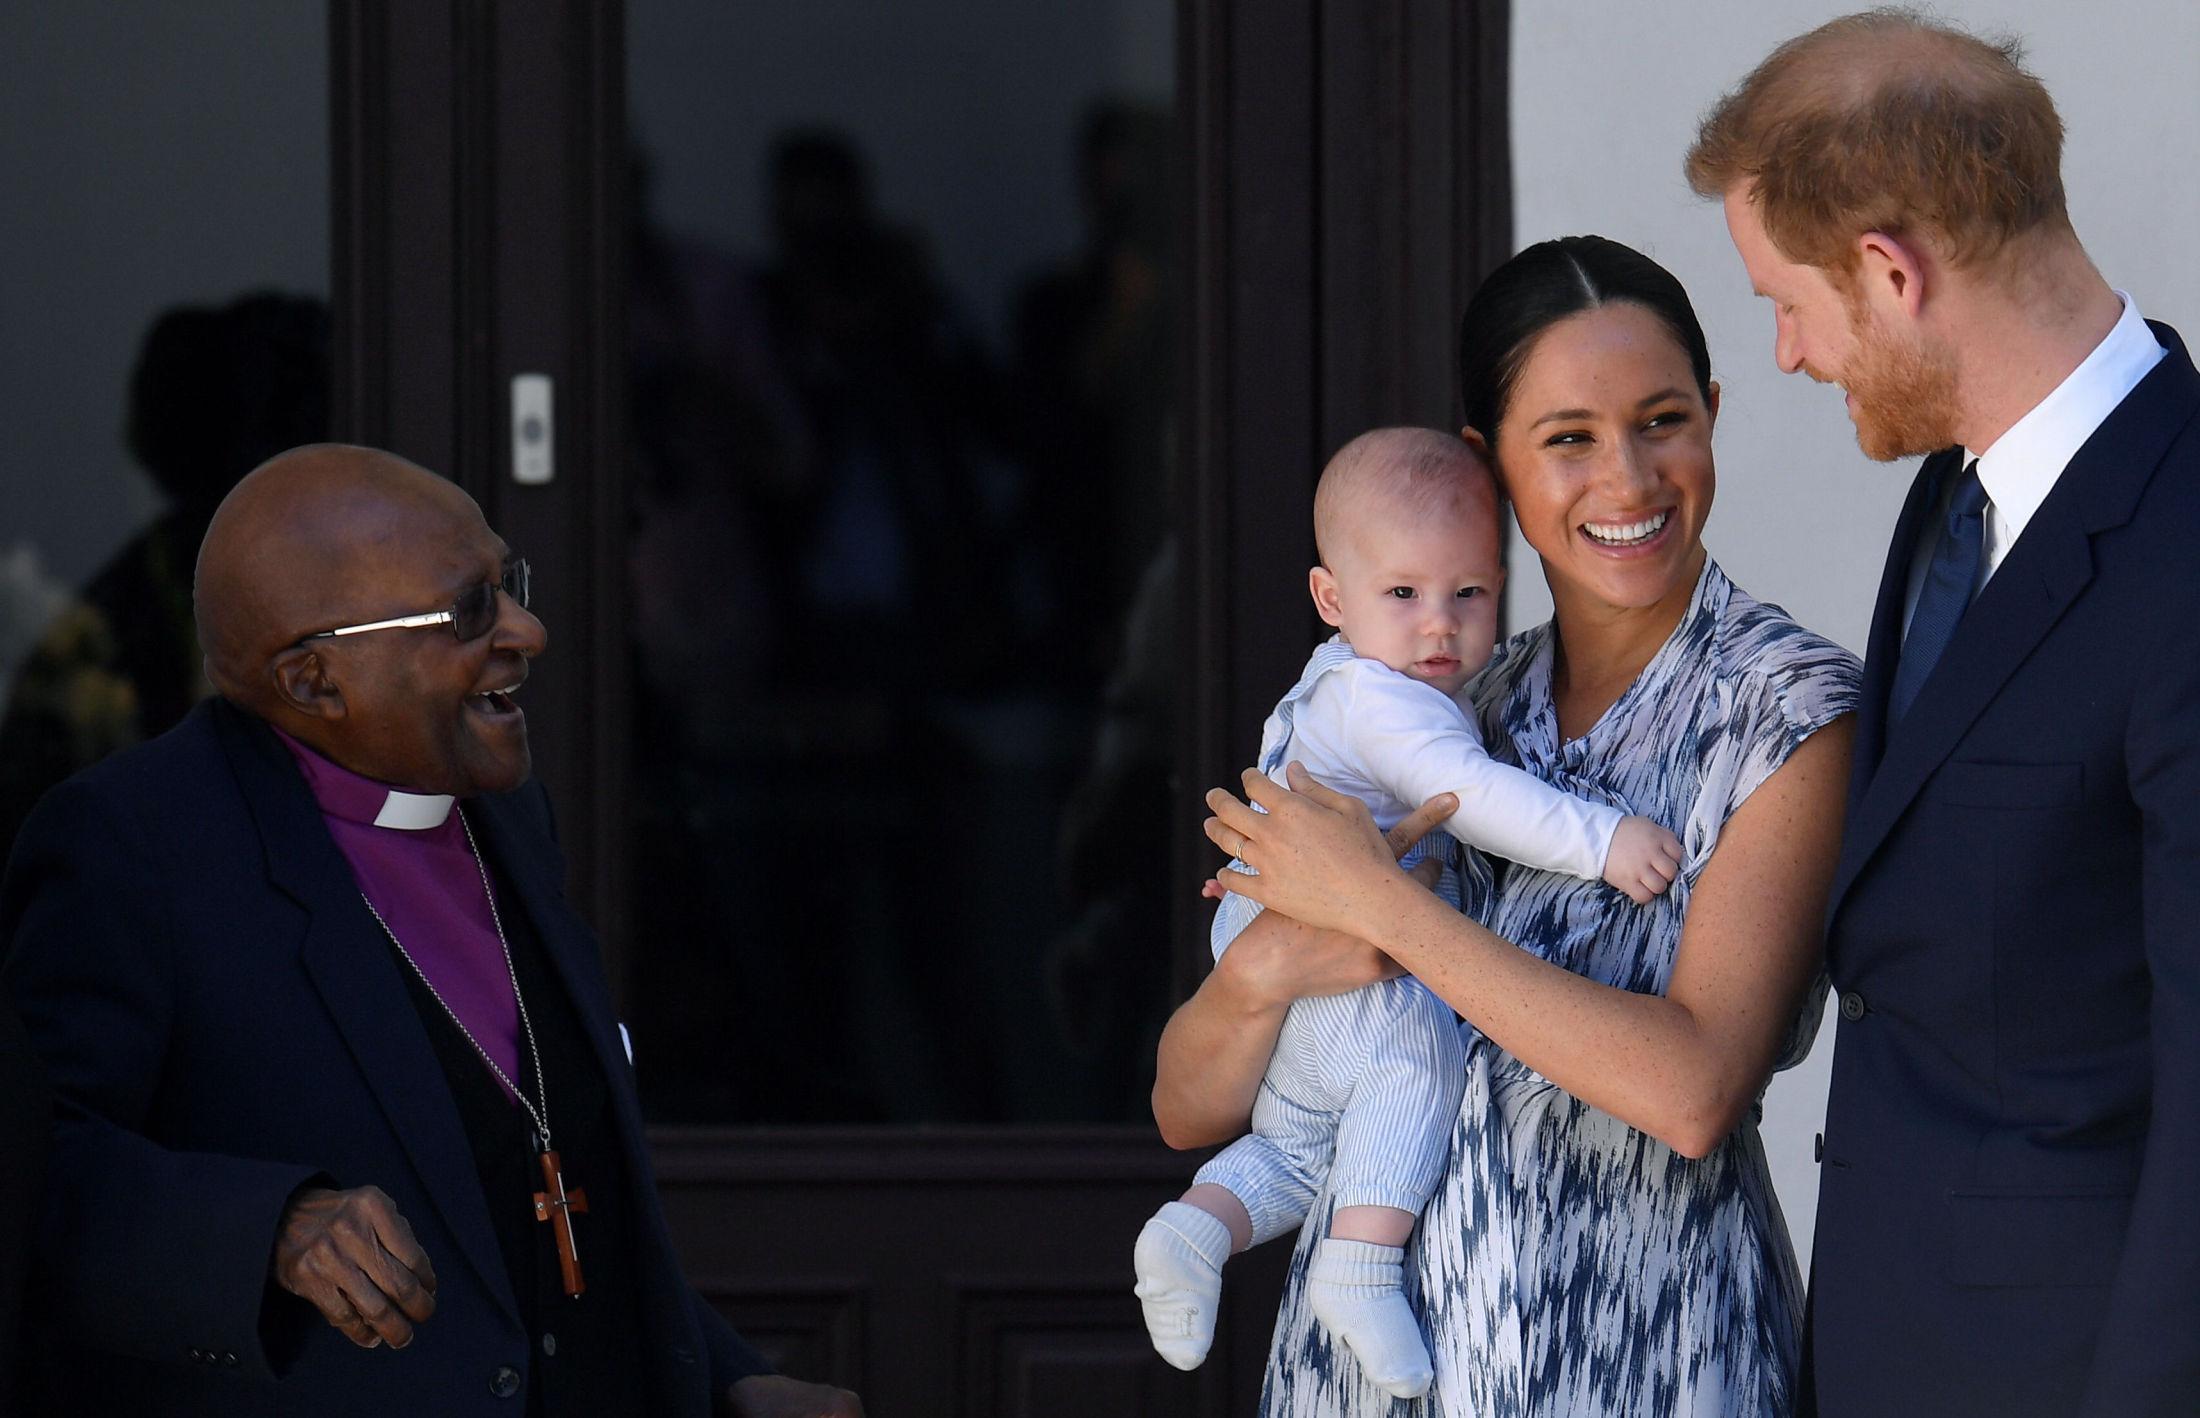 Meghan i kjole fra Club Monaco. Sammen med Desmond Tutu, sønnen Archie og prins Harry. Foto: Pa Photos